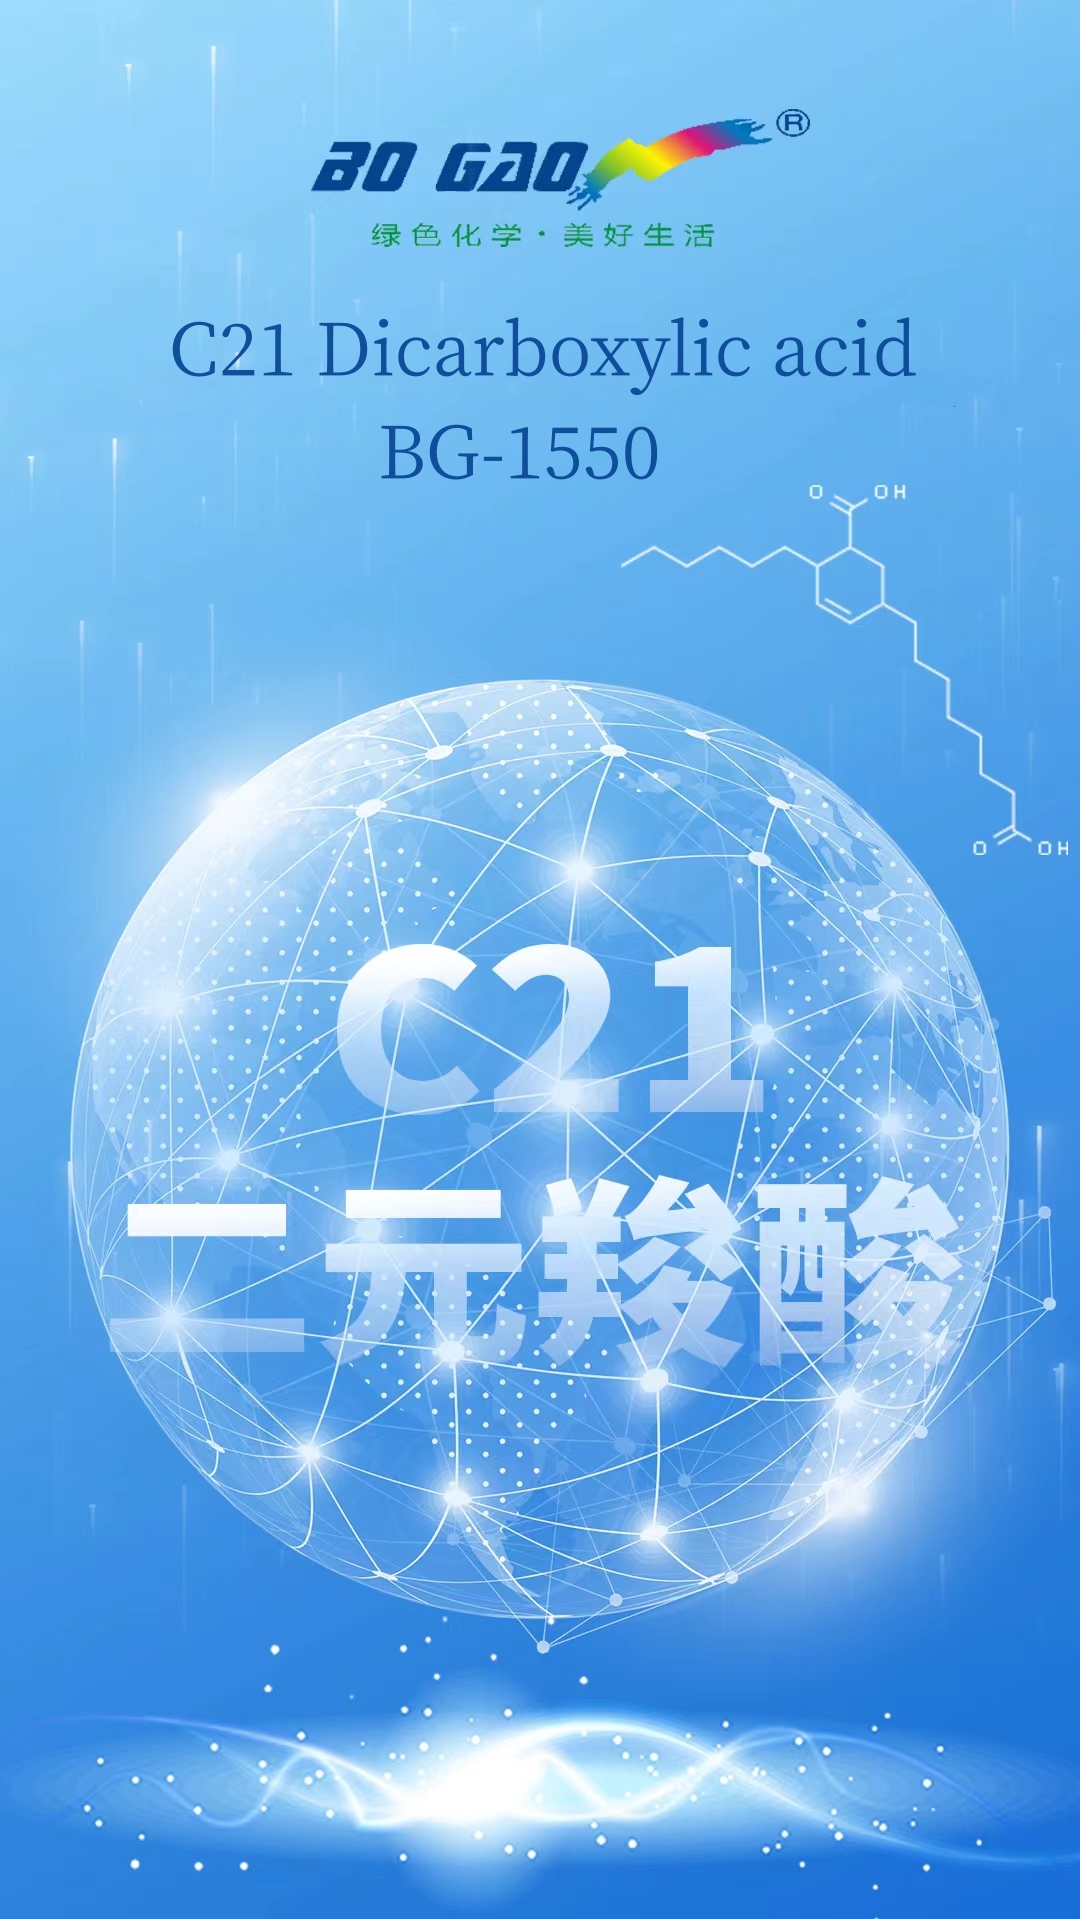 BoGao نے ملٹی فنکشنل ایپلی کیشن-C21 Dicarboxylic acid/BG-1550 کا آغاز کیا